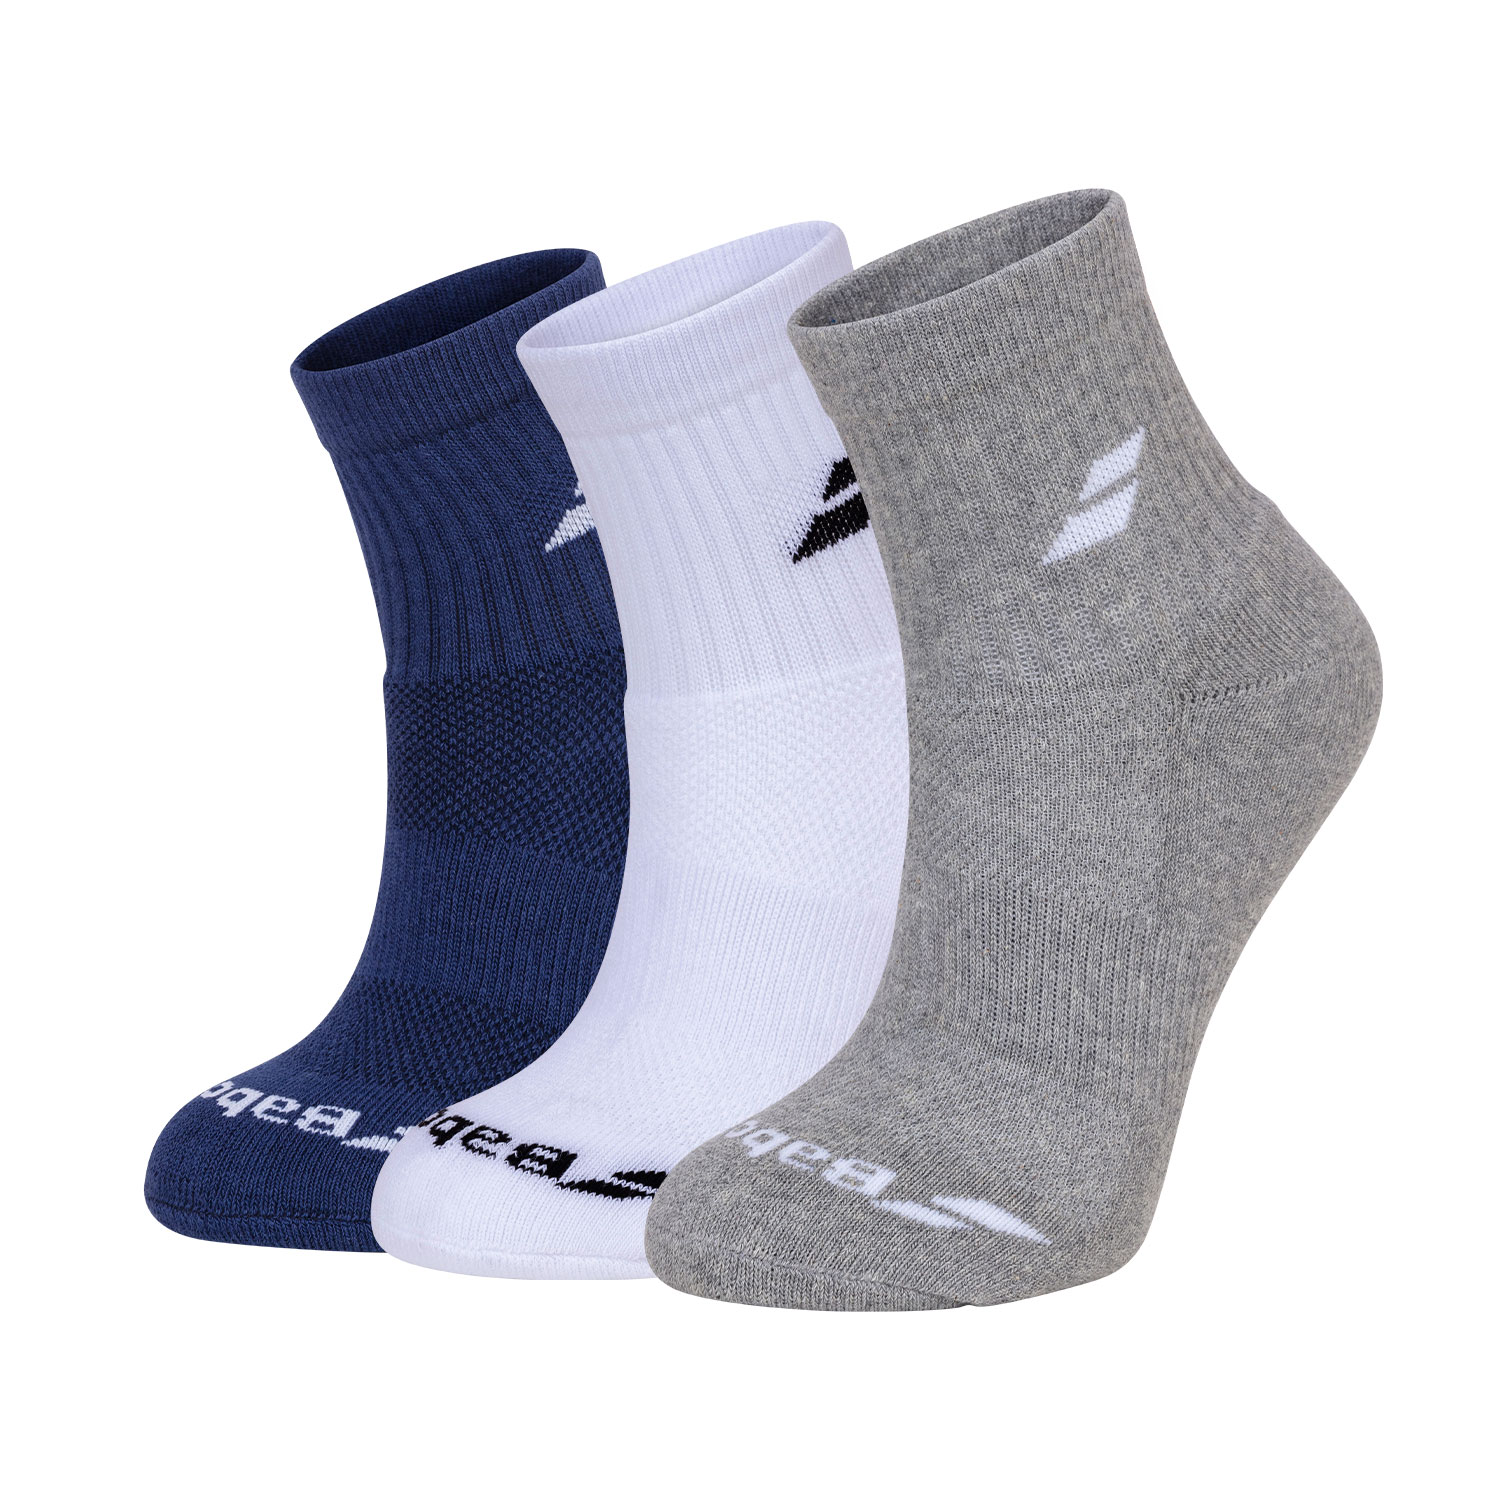 Babolat Performance x 3 Socks - White/Estate Blue/Grey